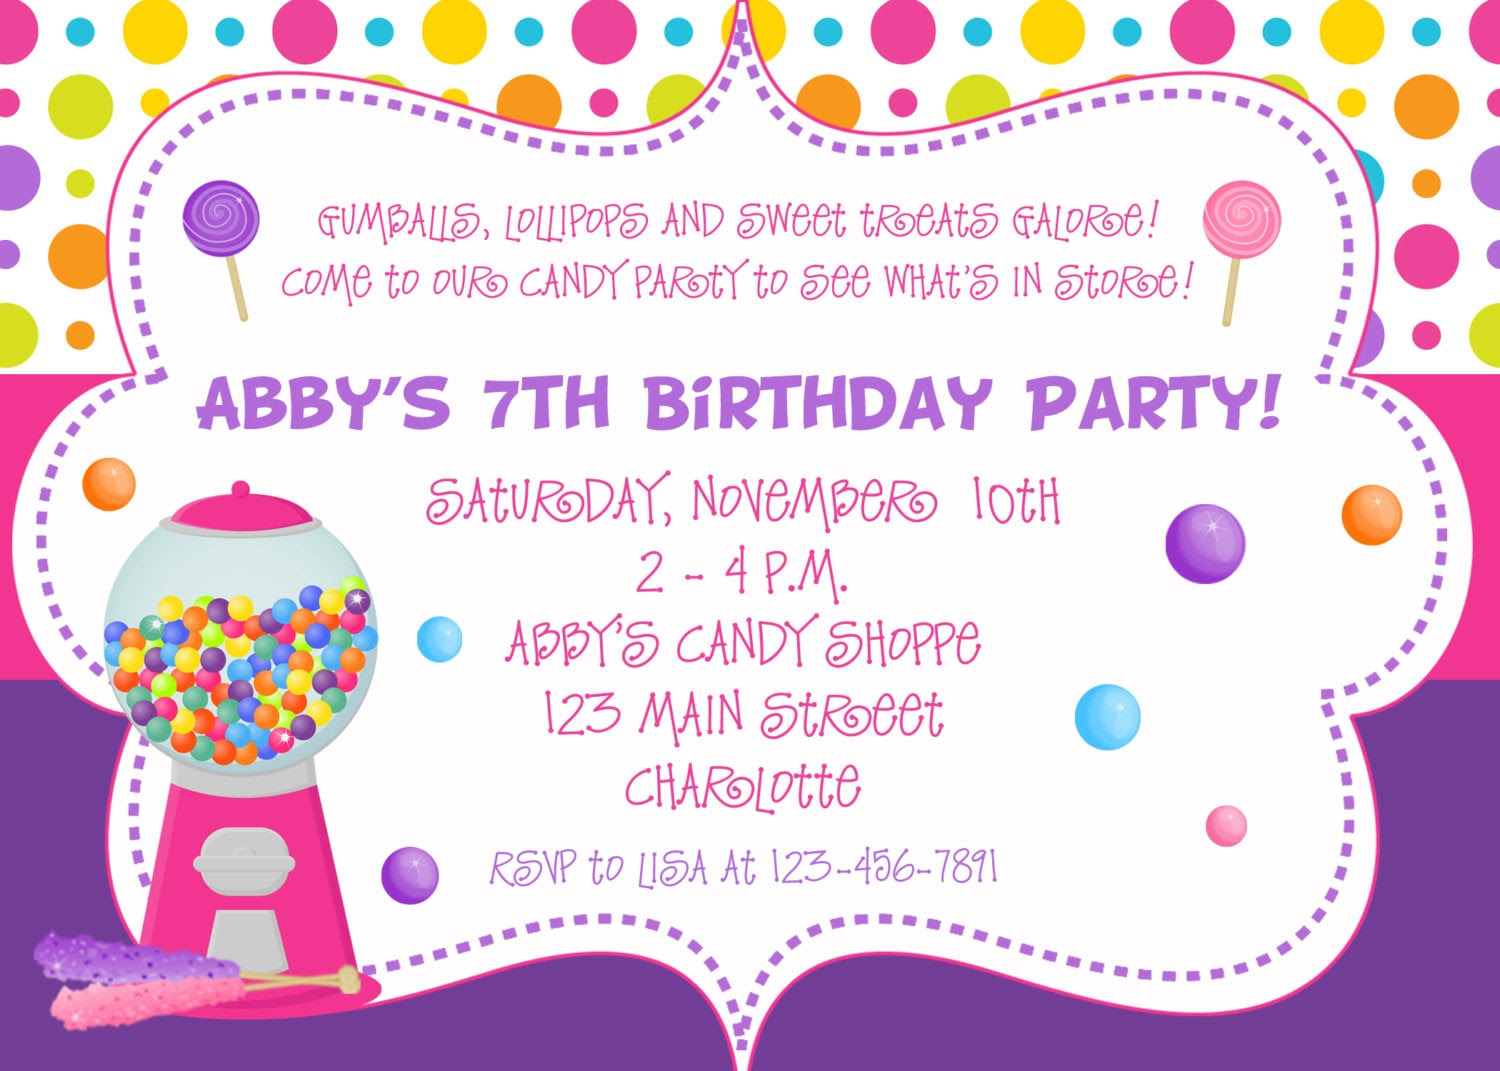 Contoh Invitation Birthday Party Sweet Seventeen - Tweeter 